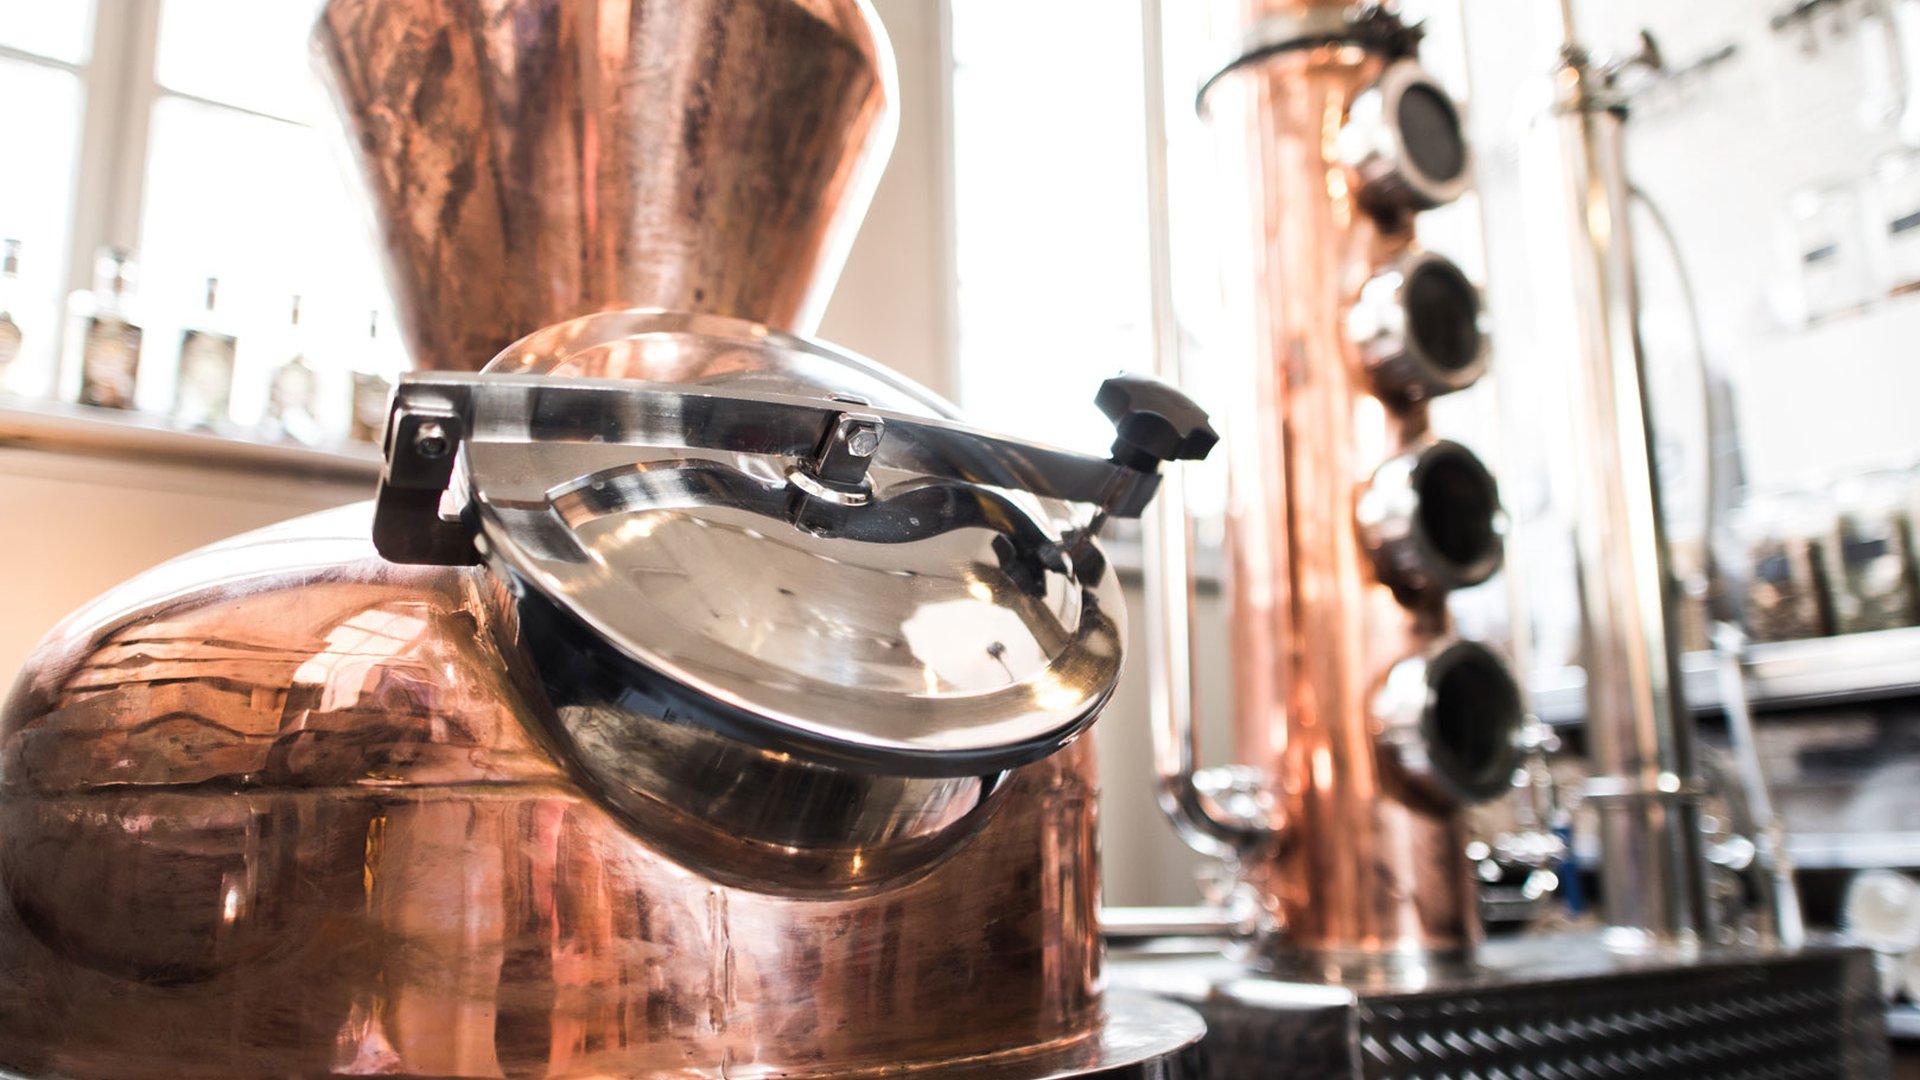 A tour of London's gin distilleries